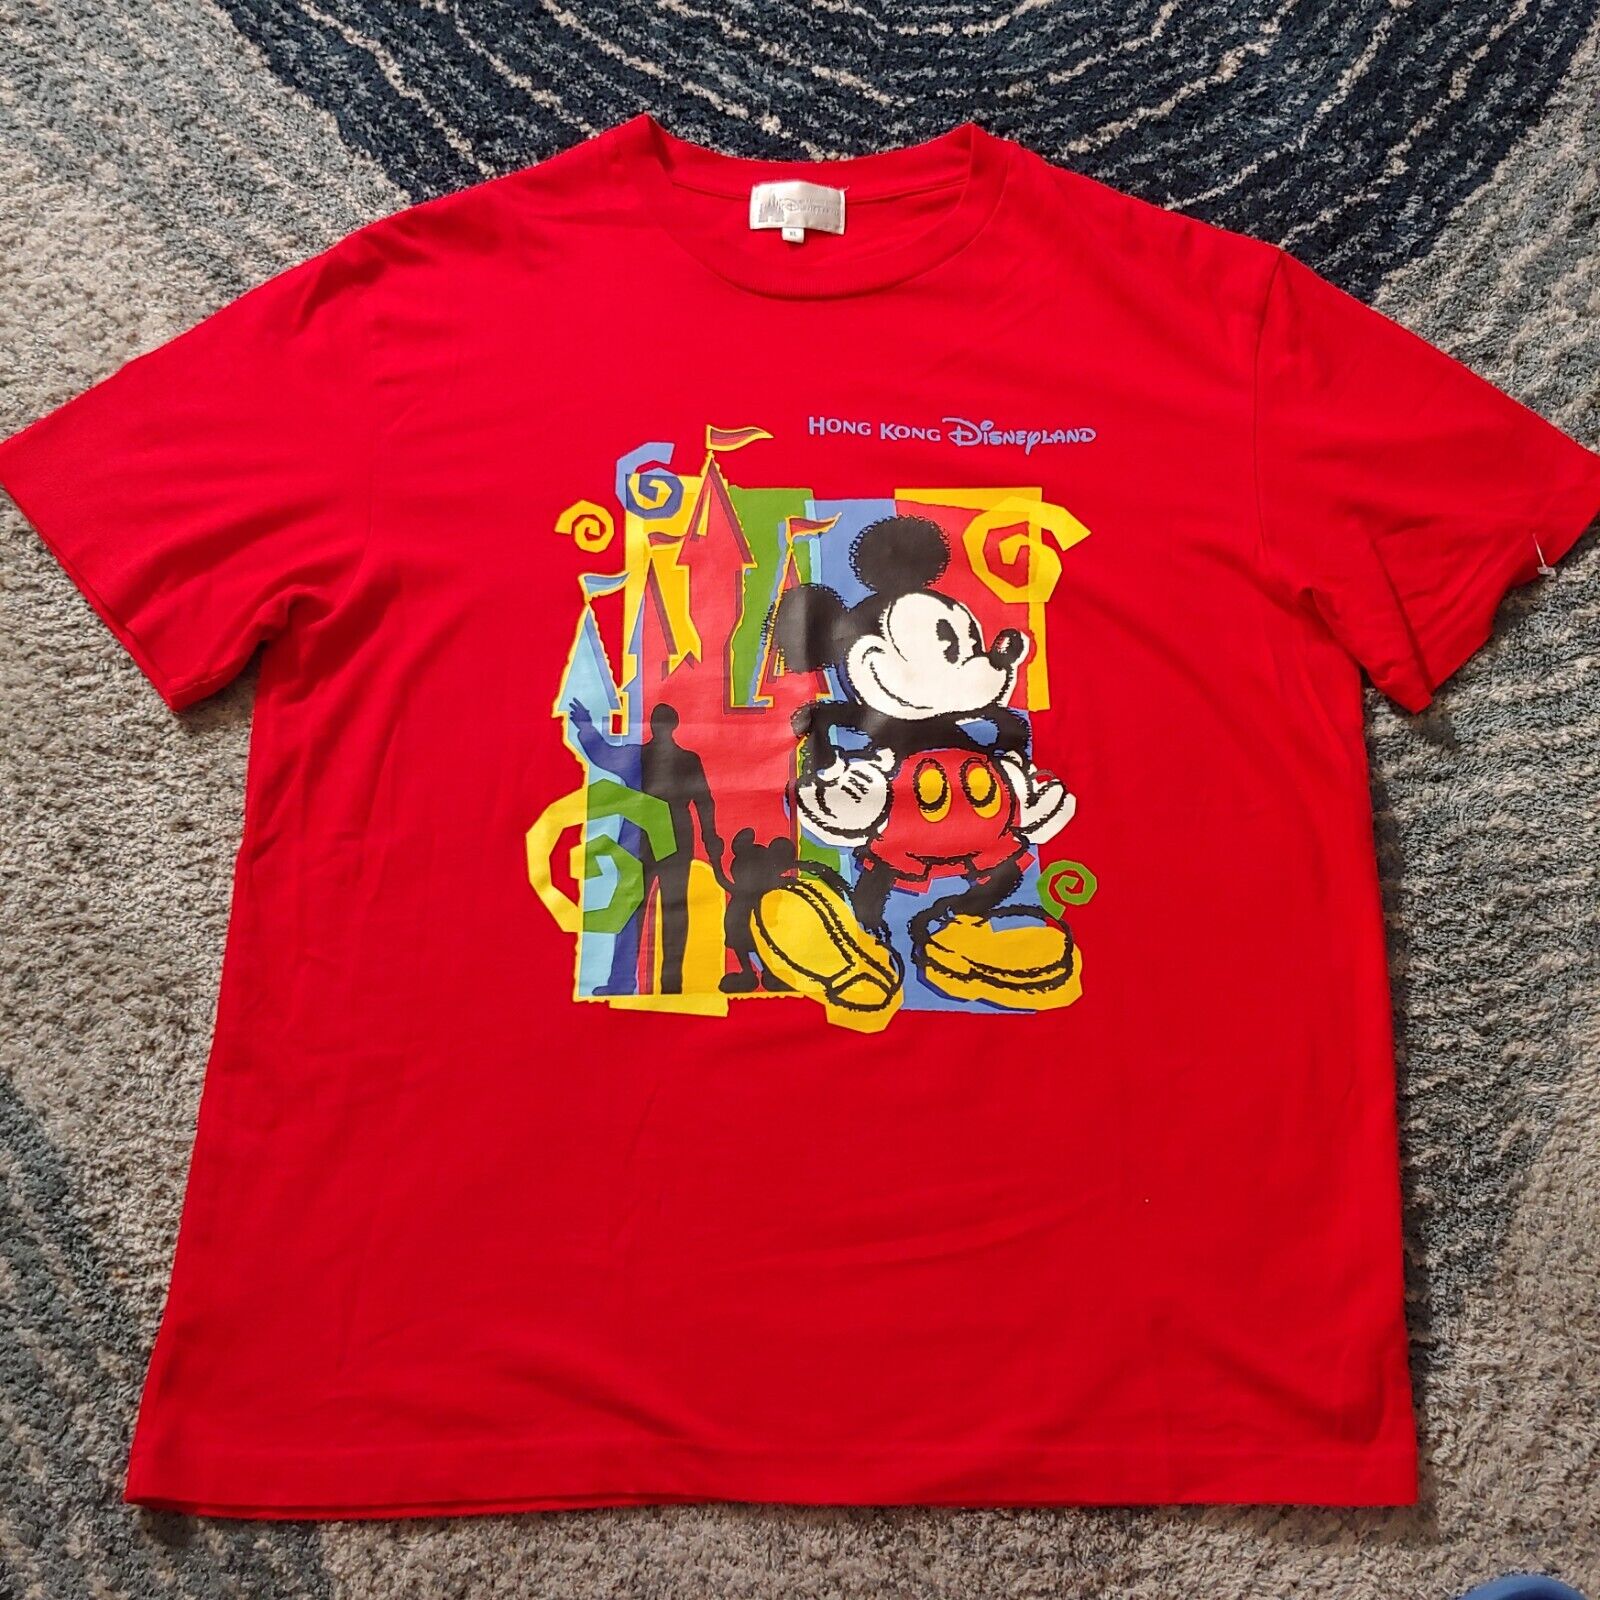 Hong Kong Disneyland Mickey Mouse Red T-Shirt Sz XL